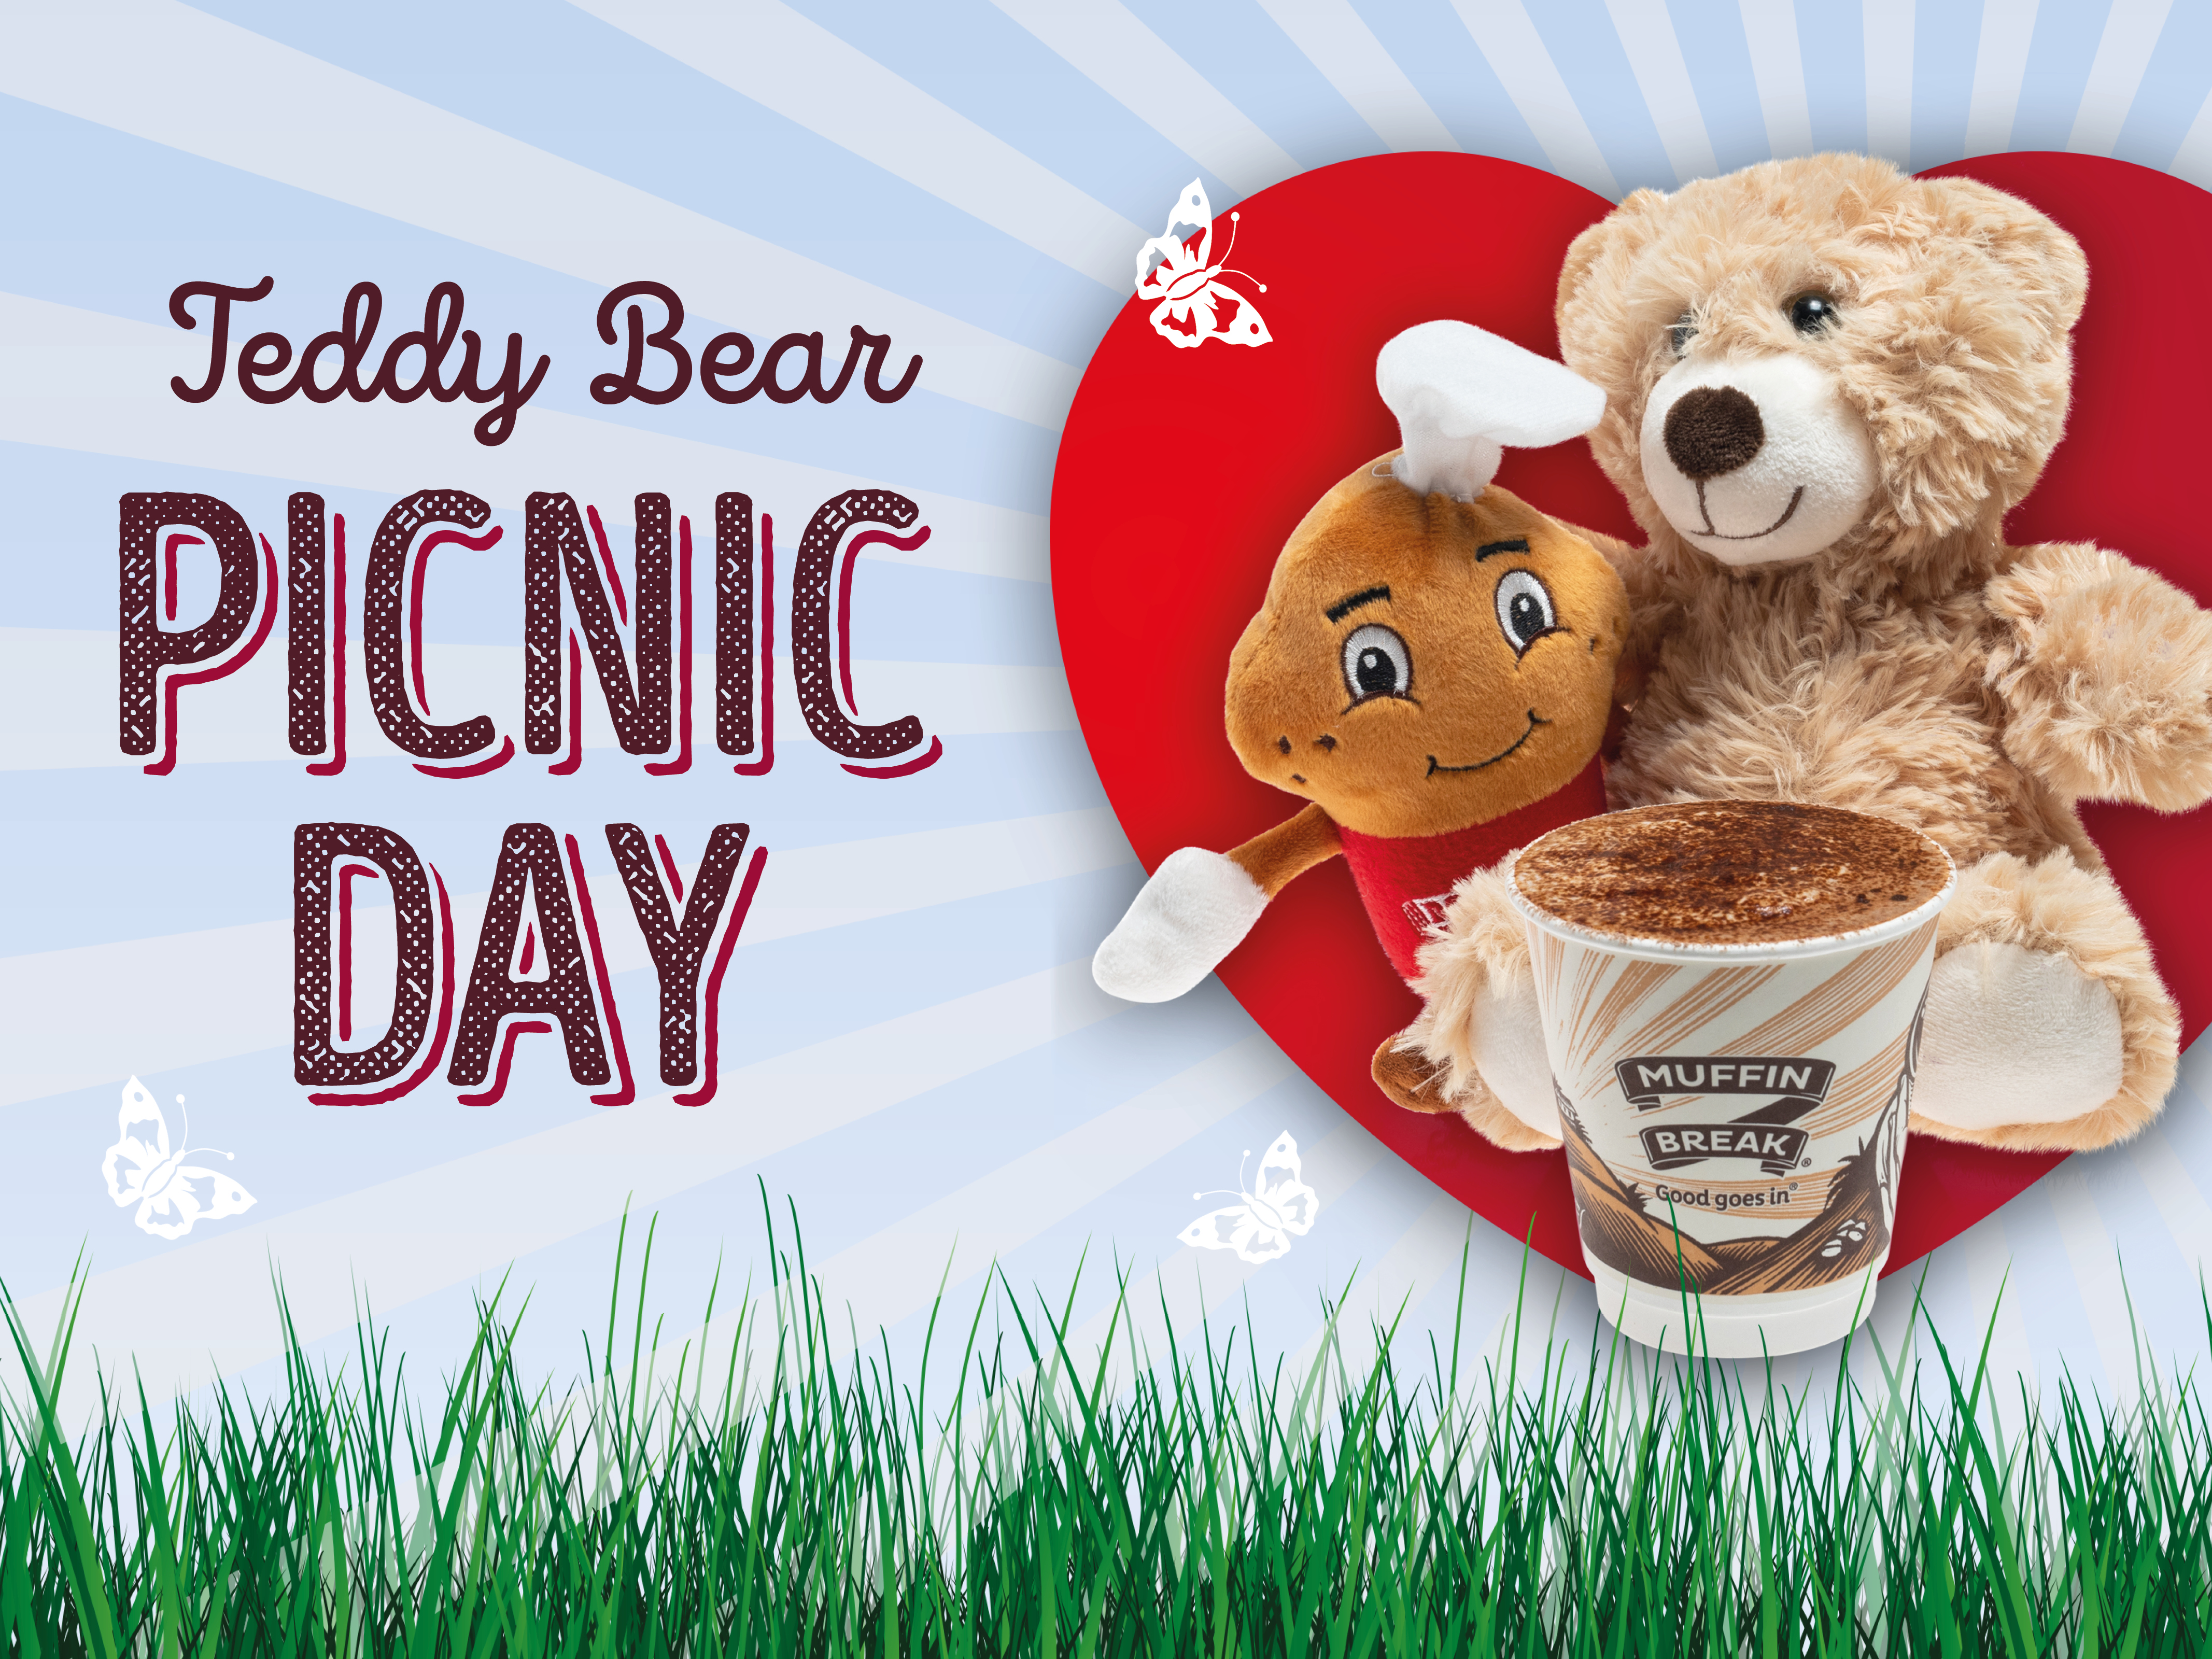 Teddy Bear Picnic Day Muffin Break New Zealand